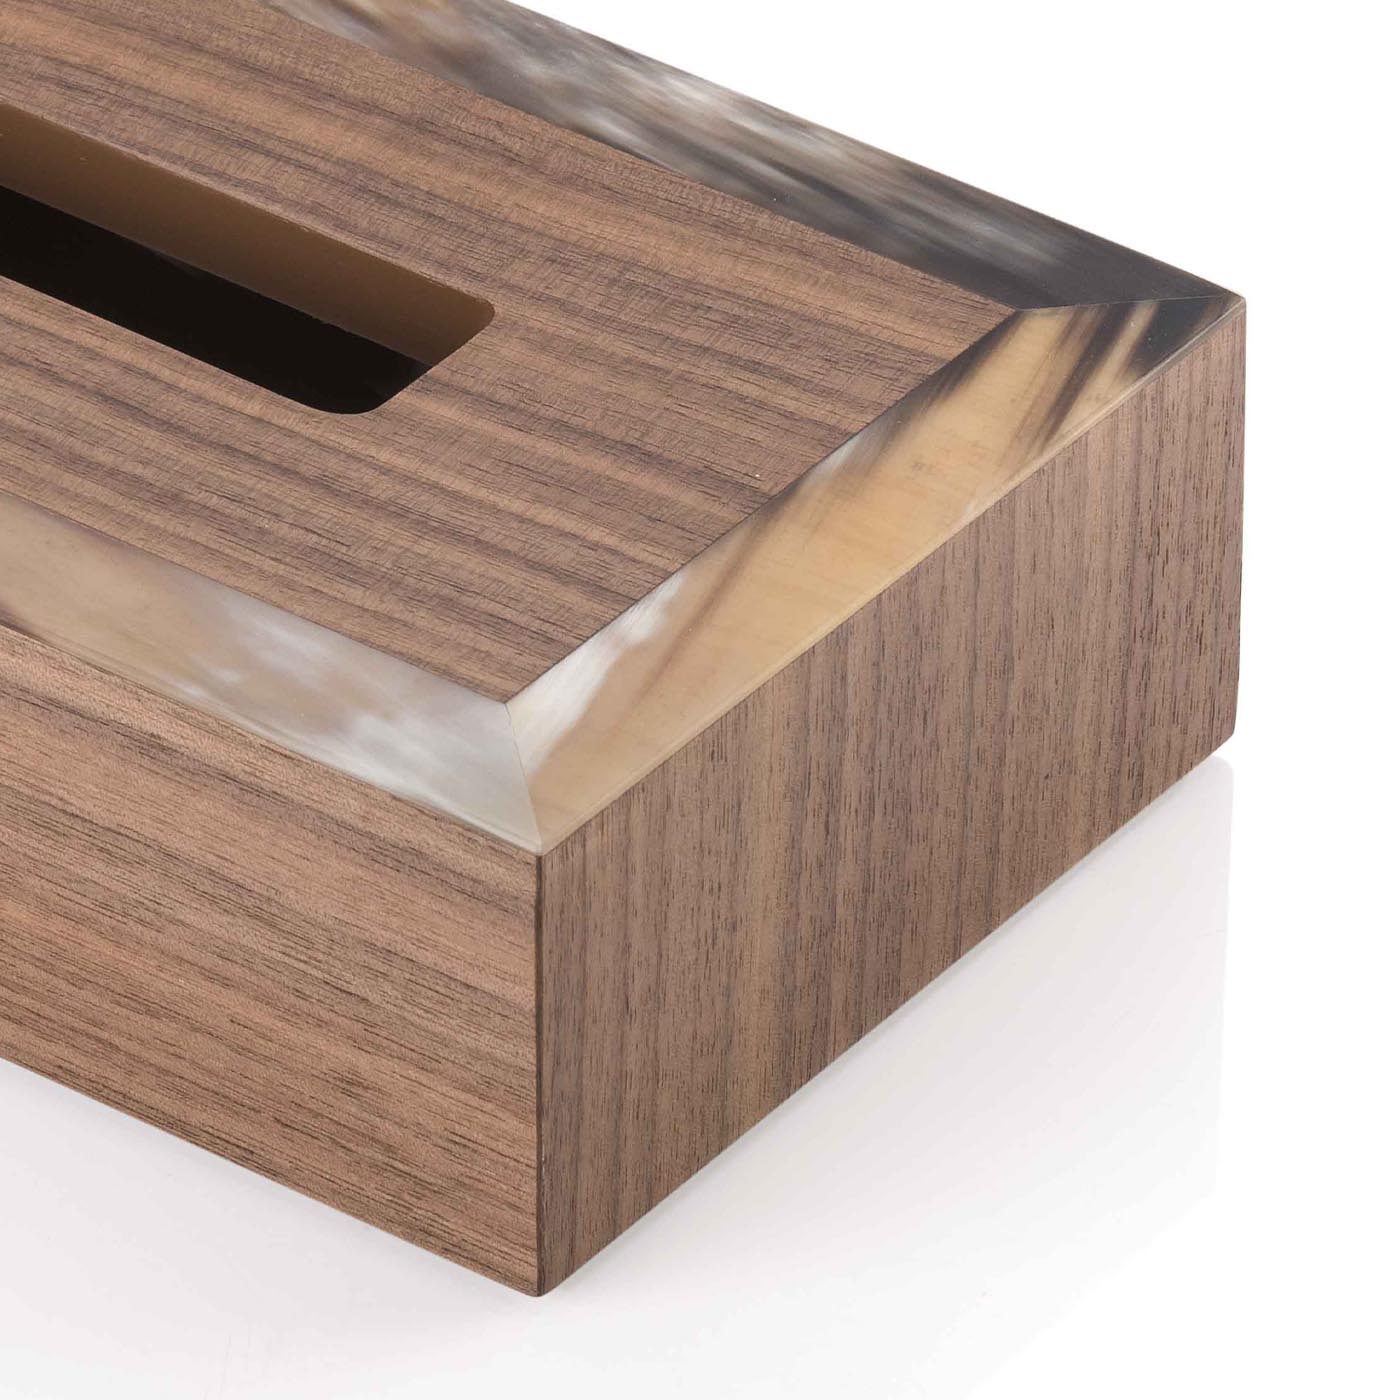 Bath sets - Geremia tissue box holder in matte horn and Canaletto walnut veneer - detail - Arcahorn